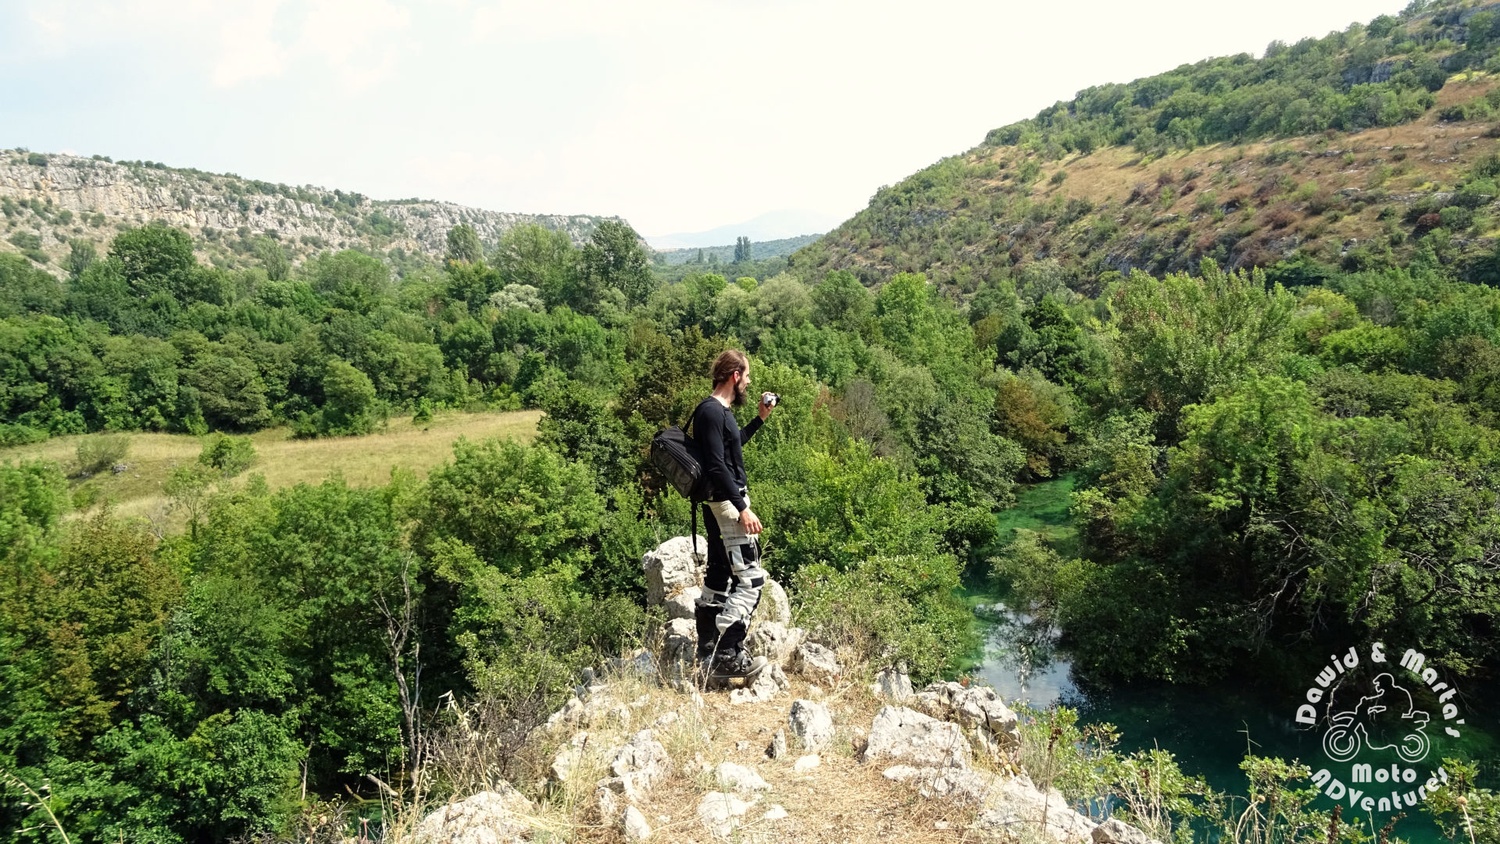 Dawid photographing Krk Park, inland Croatia